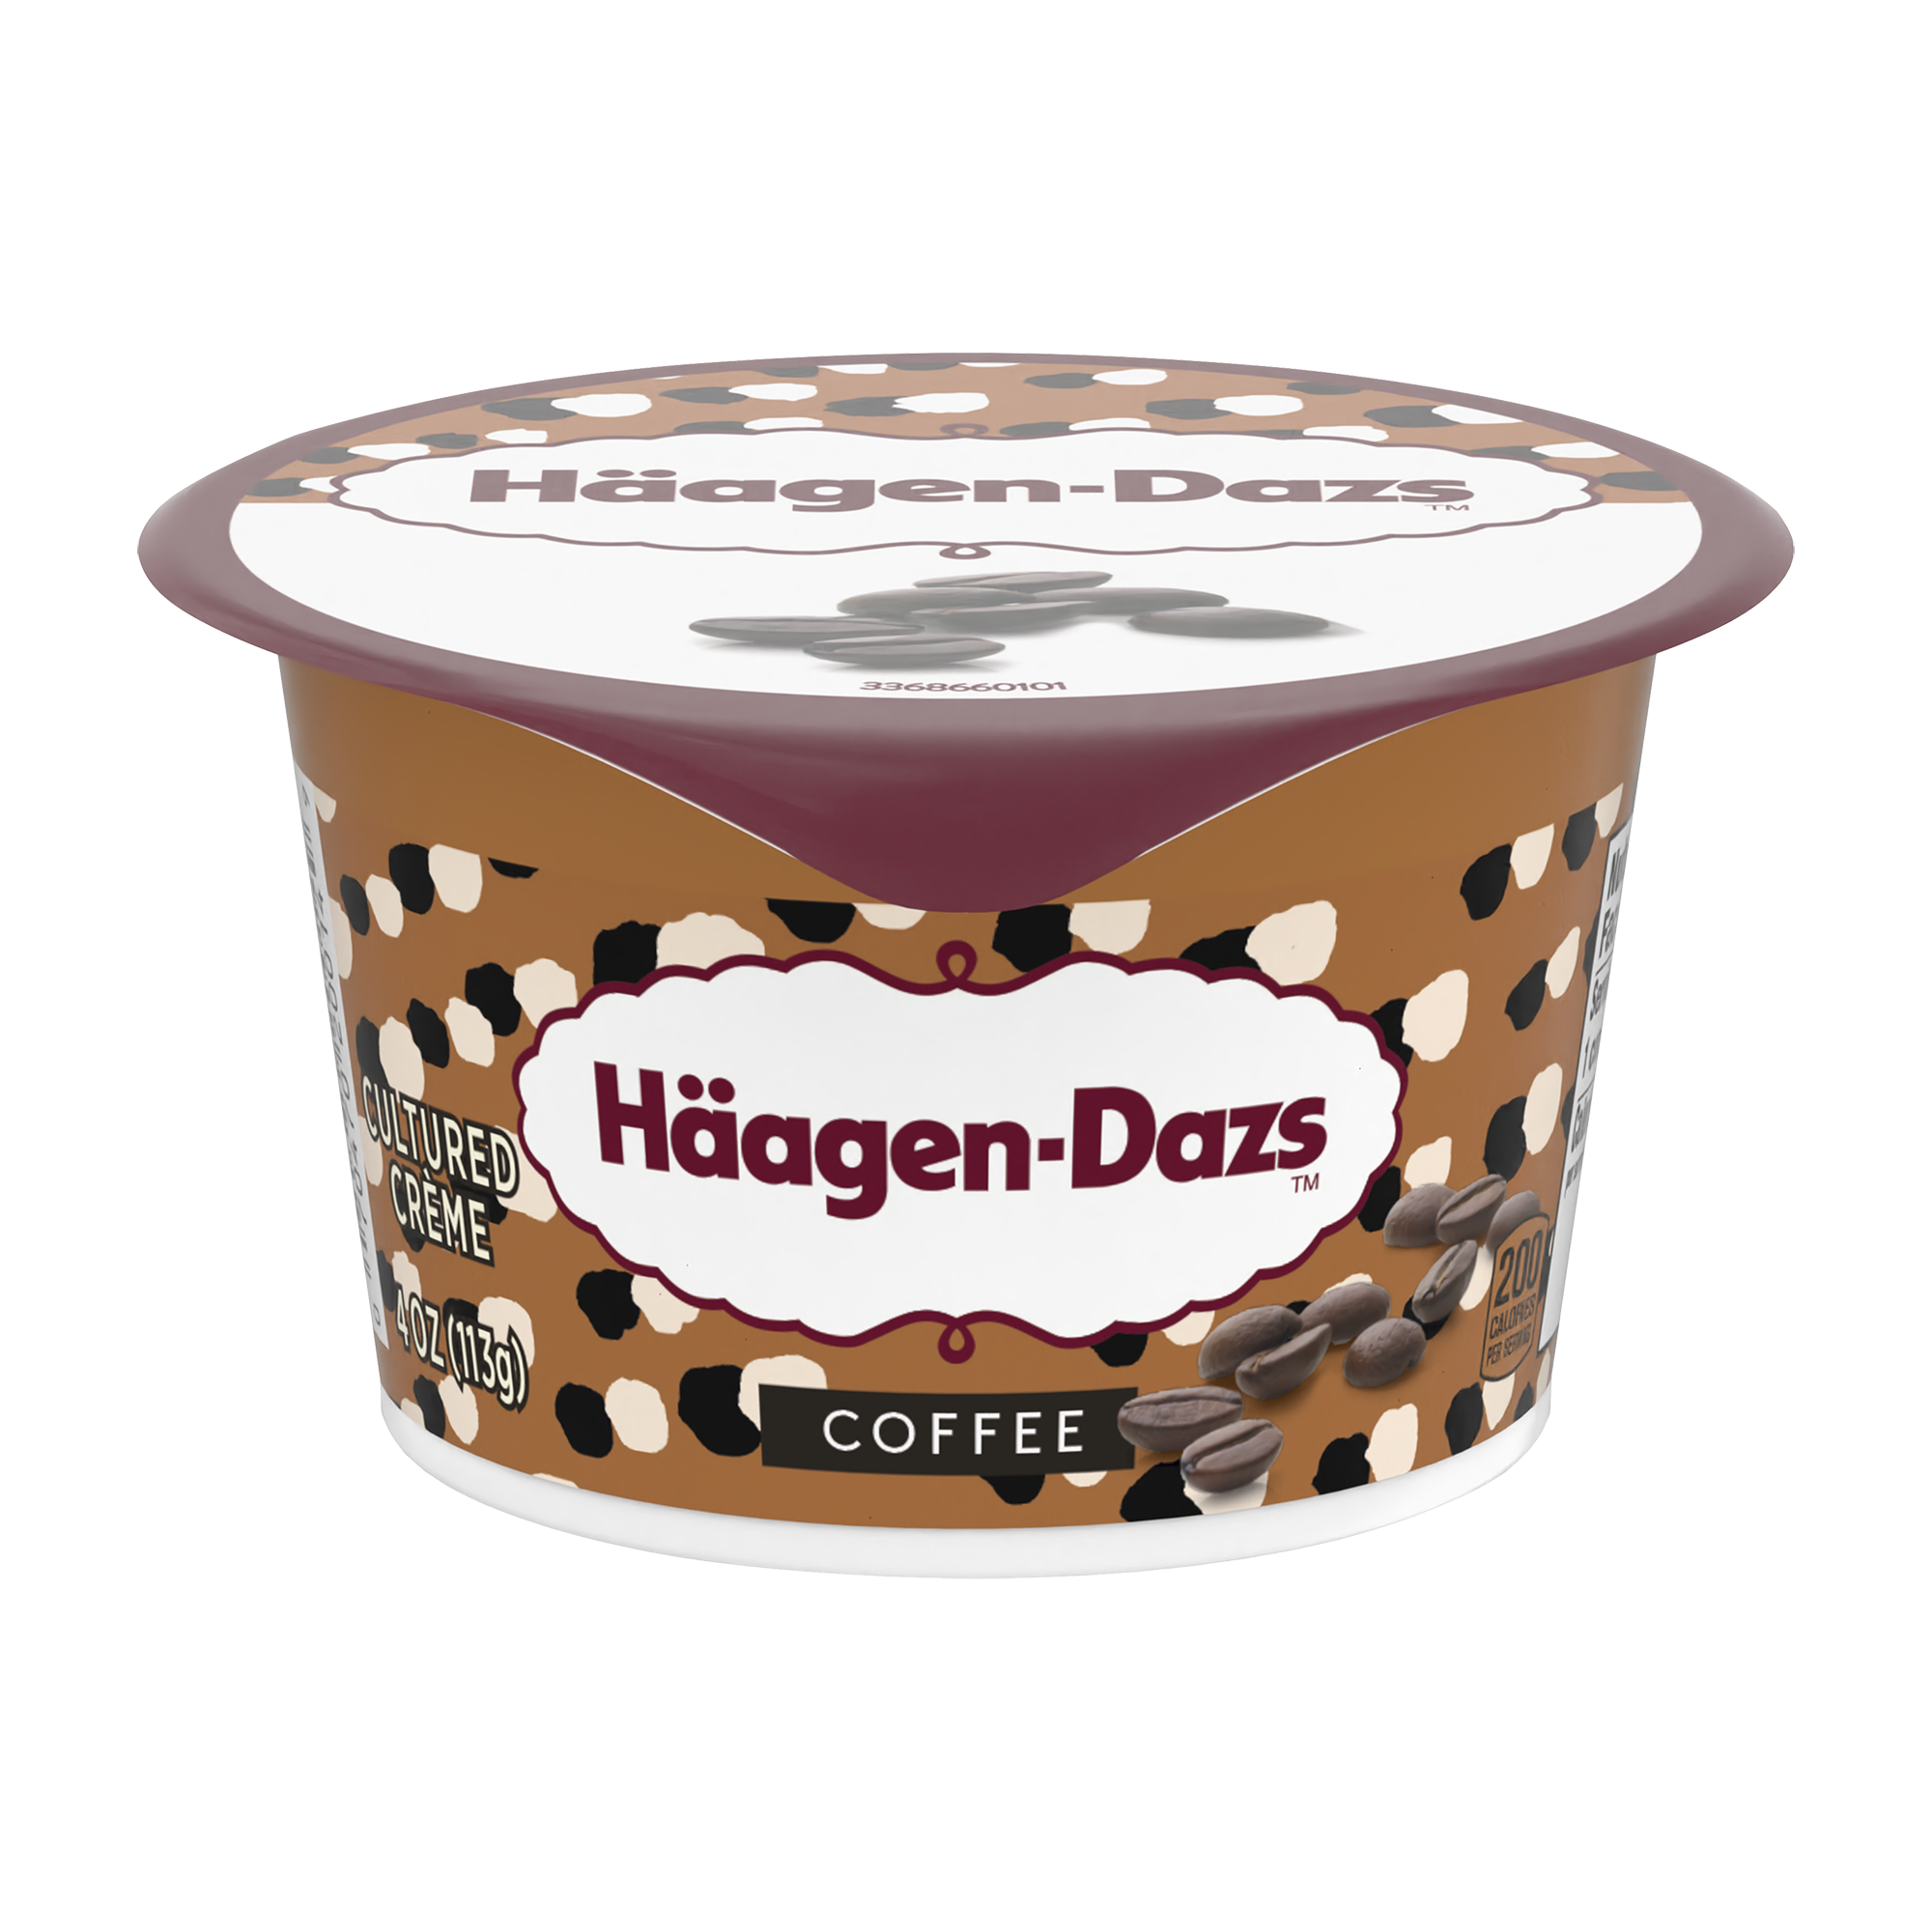 Crème Style Snack Yogurt Coffee – Häagen-Dazs Cultured